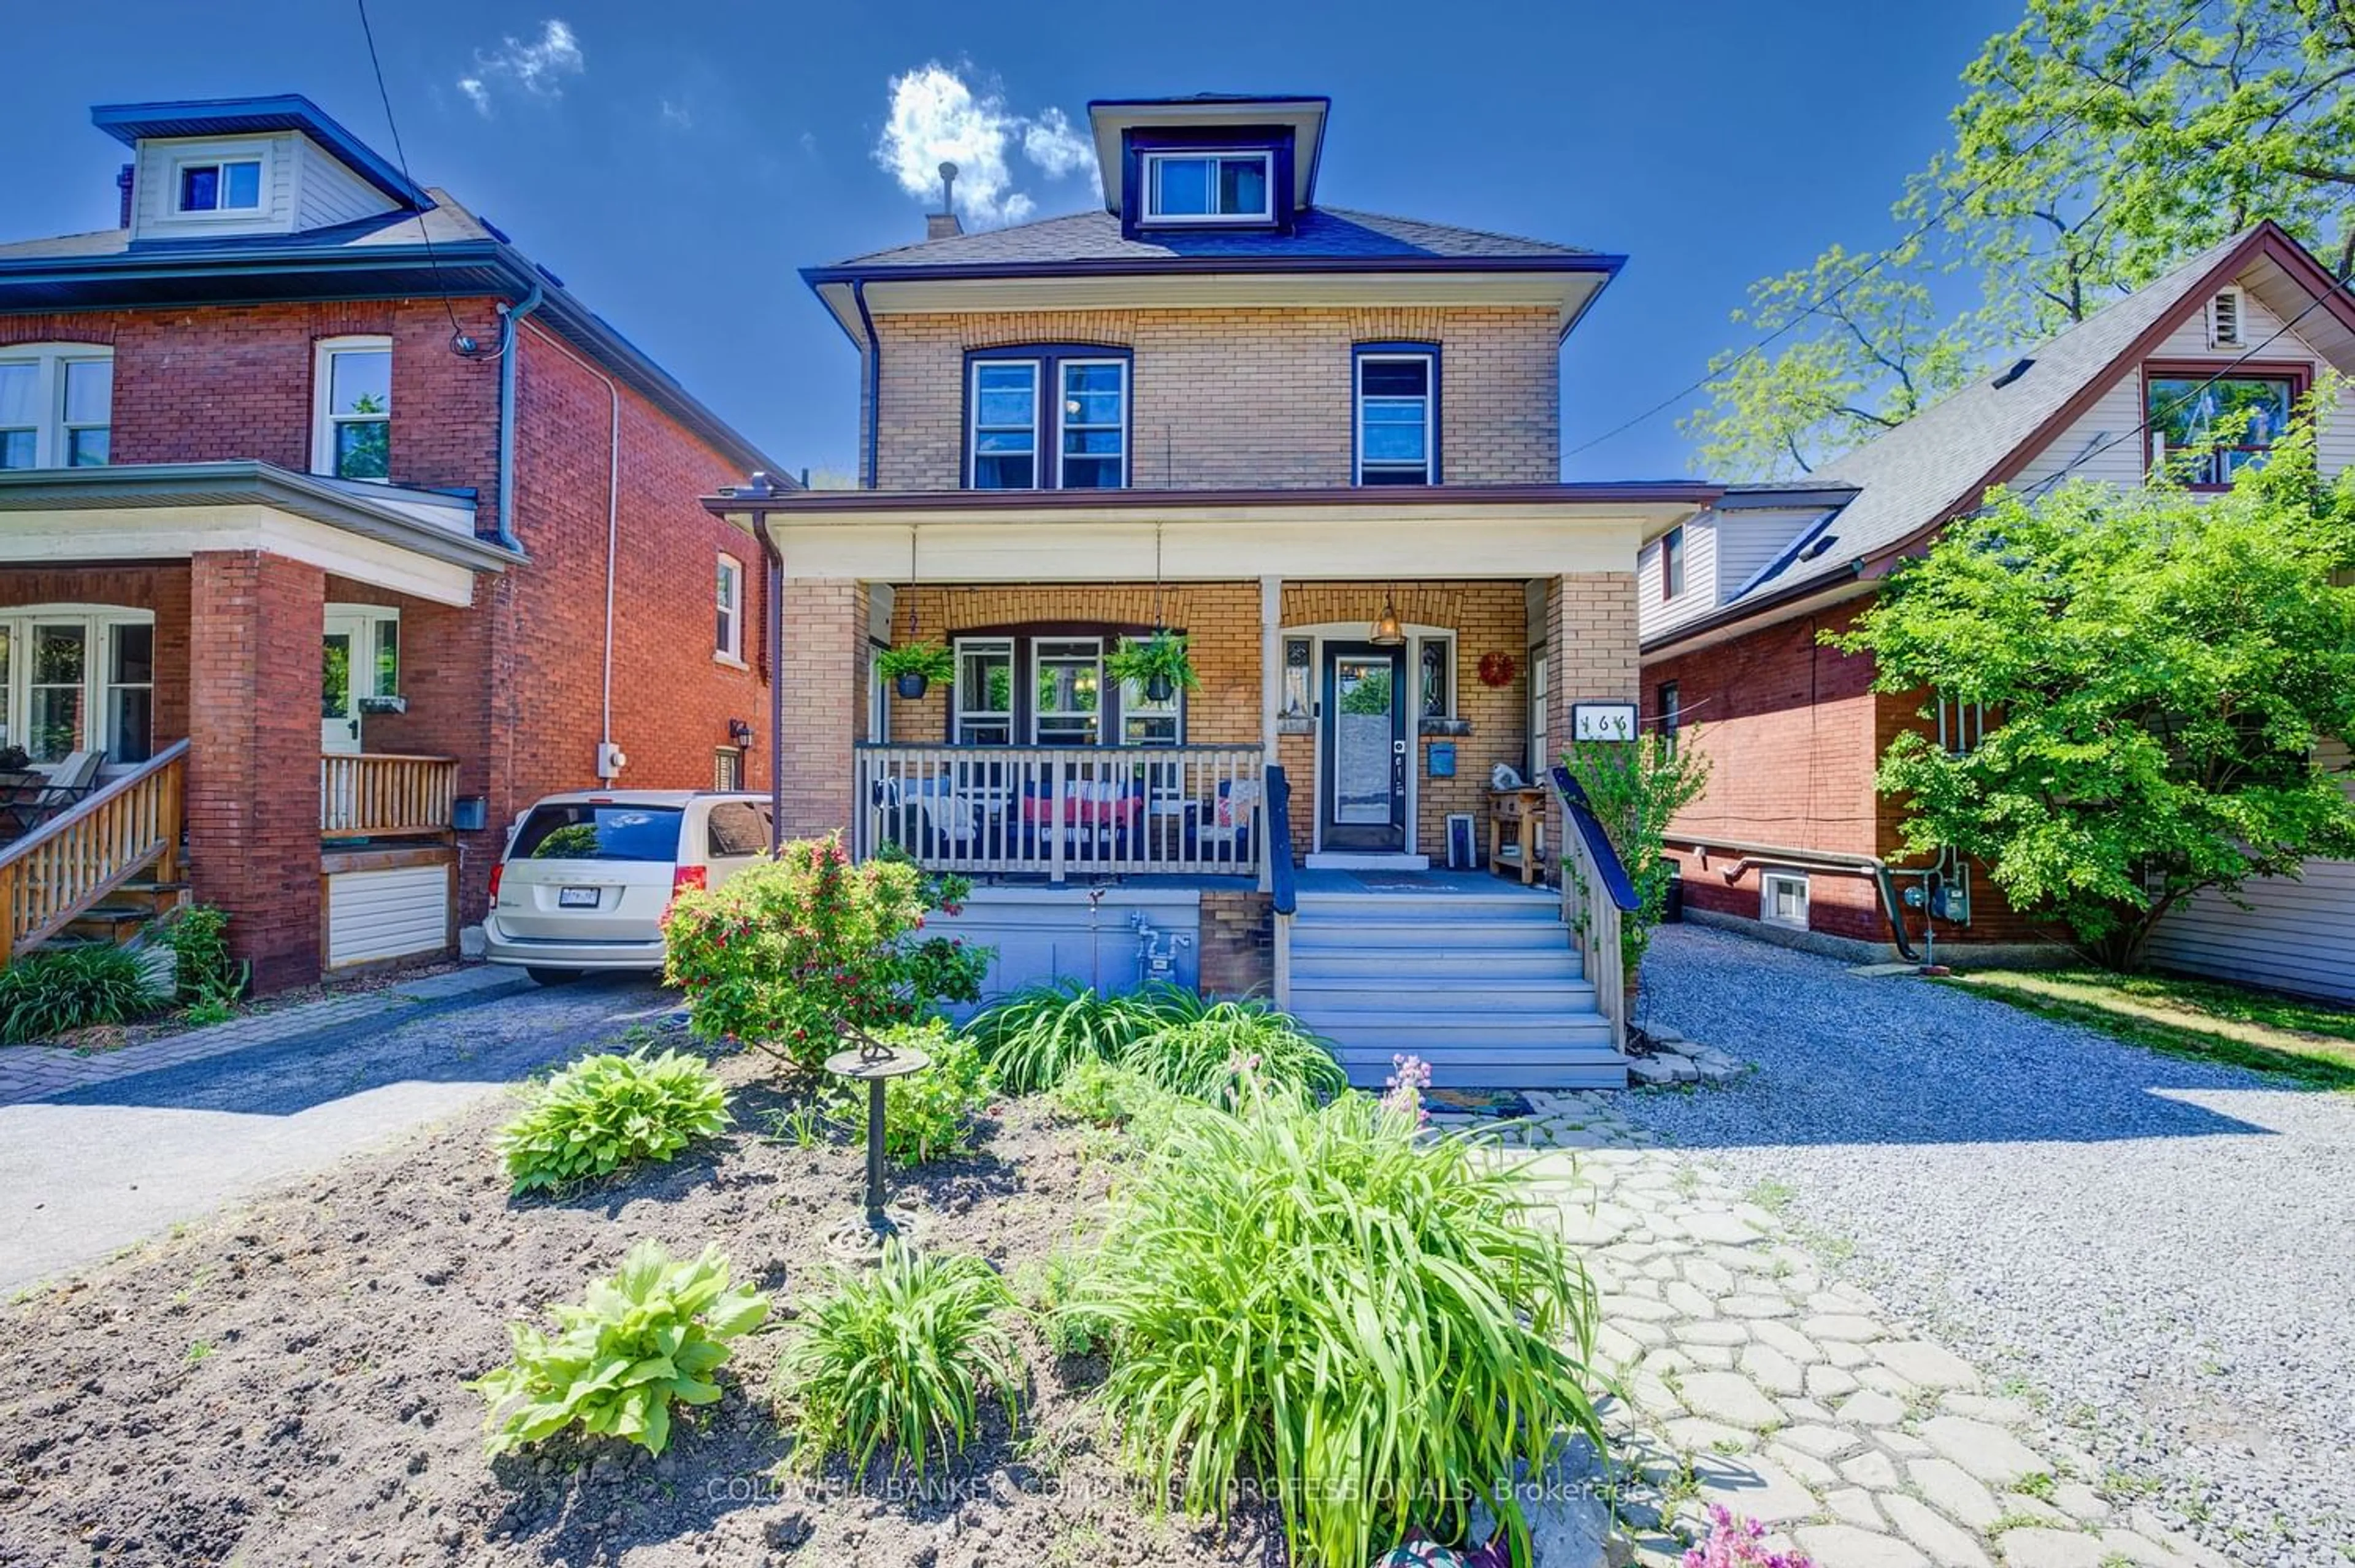 Home with brick exterior material for 166 Ottawa St, Hamilton Ontario L8K 2E6